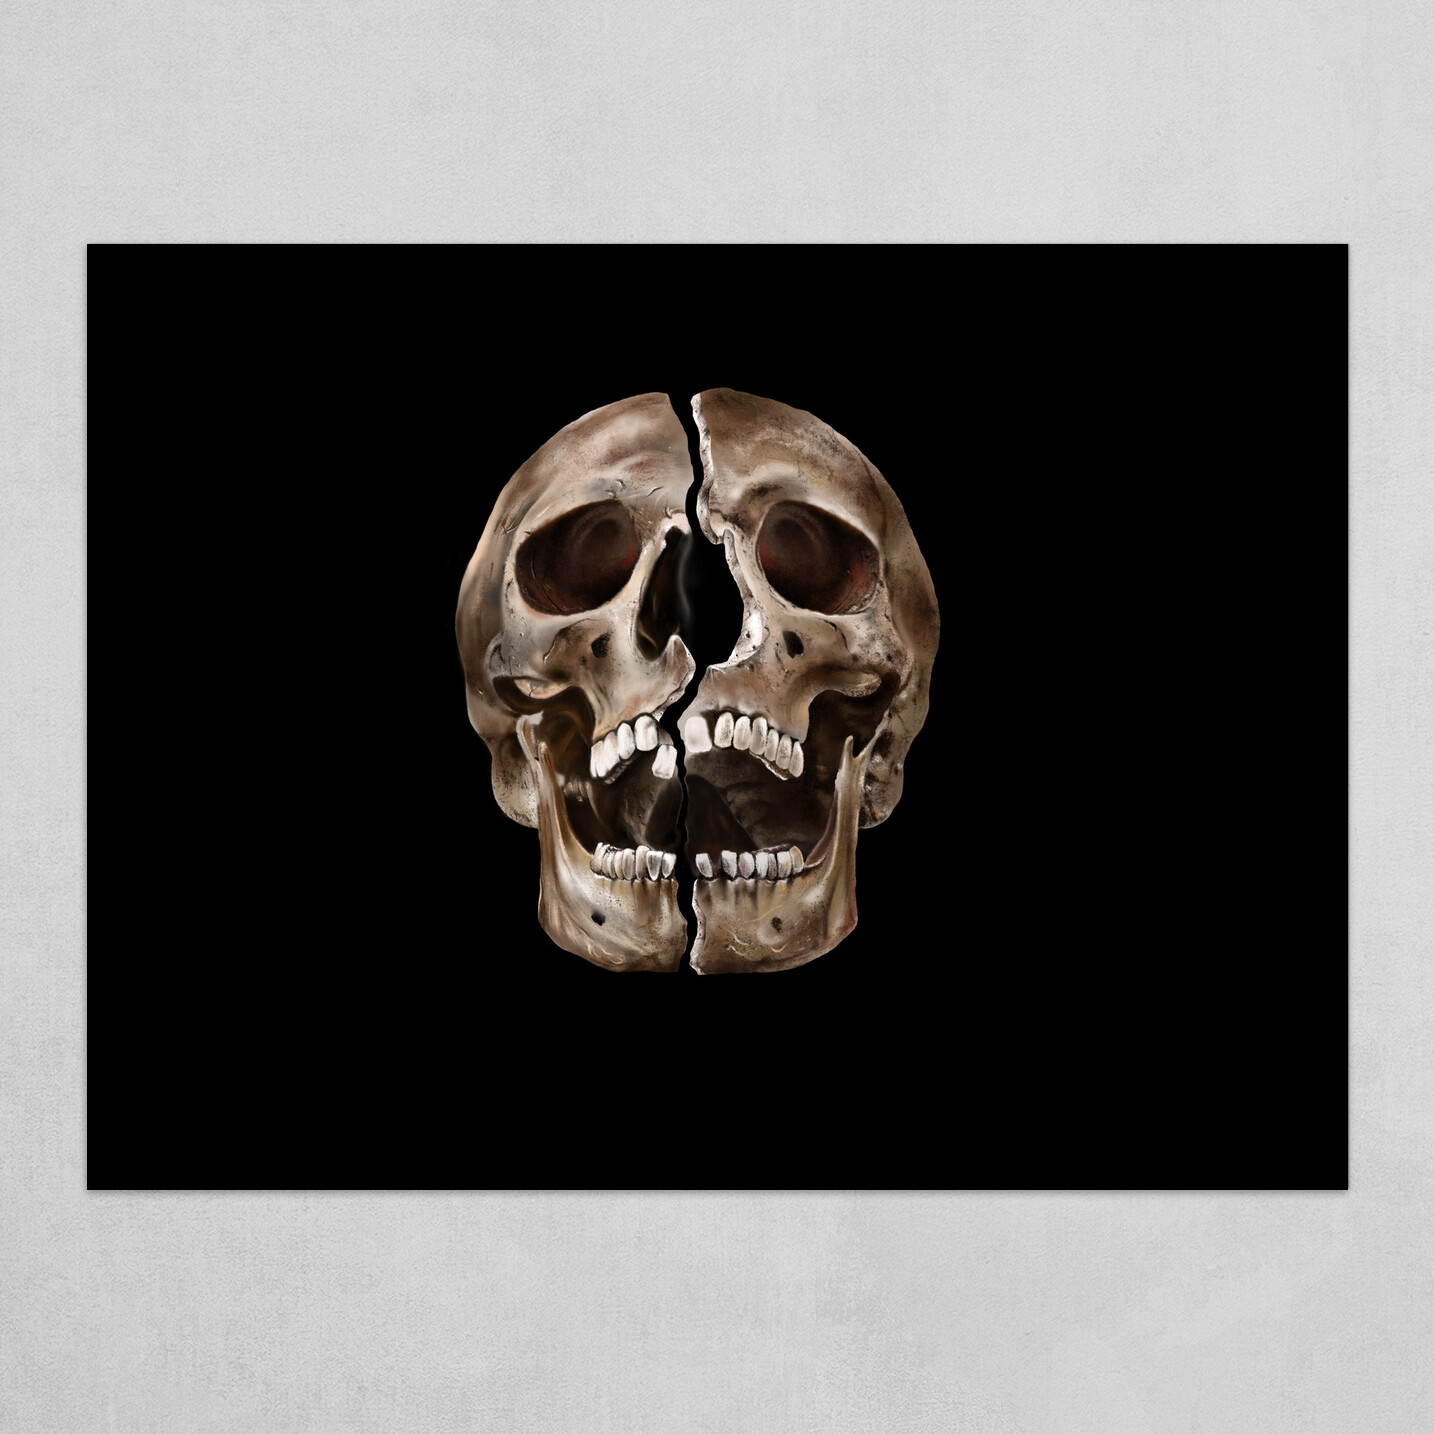 Broken skull by kripticfrostbite on DeviantArt